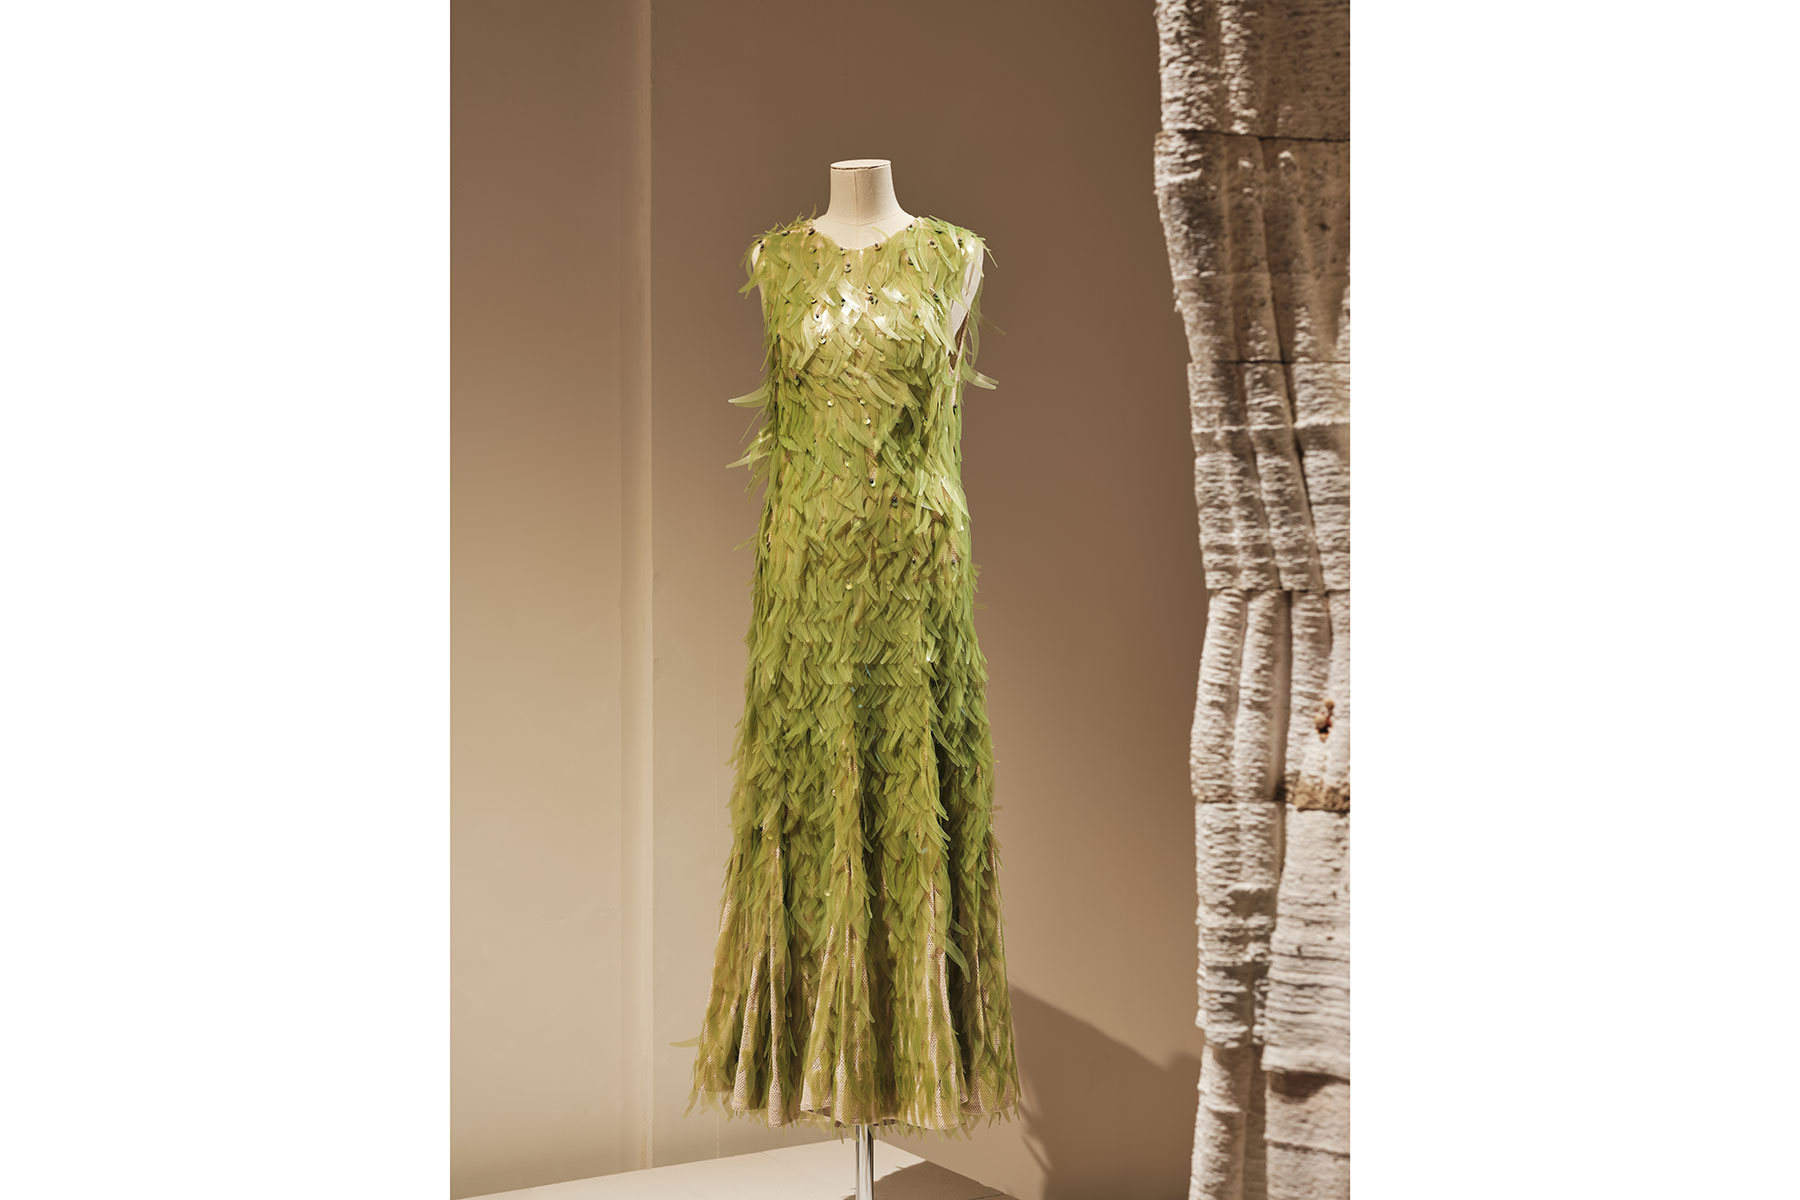 Stella McCartney Algae Dress on display at the Waste Age exhibition